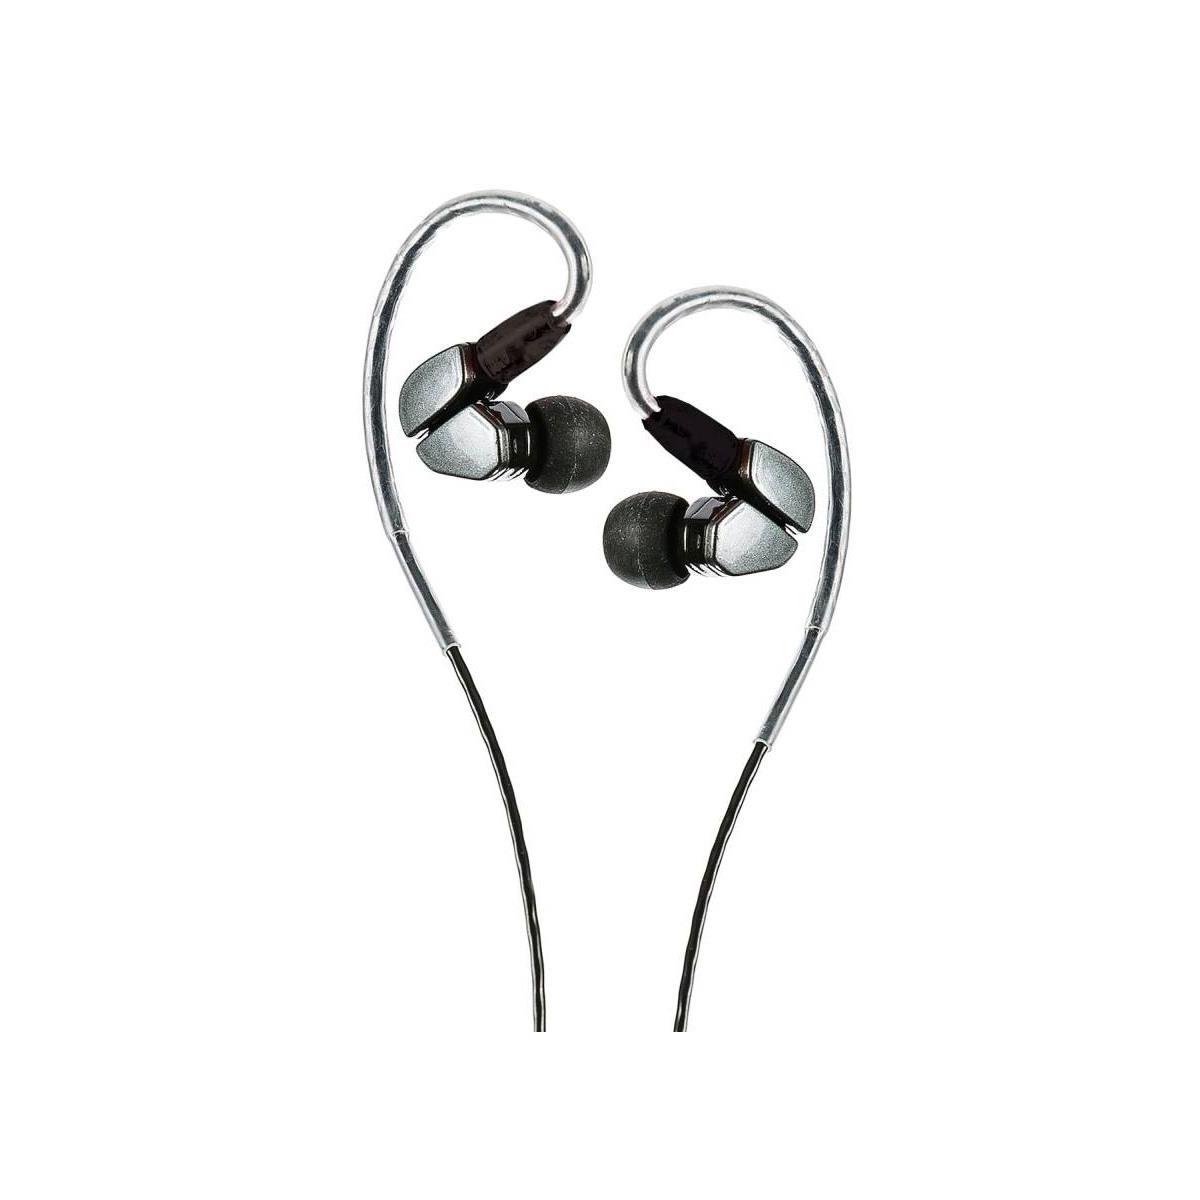 Image of Apex HP15 High Performance In-Ear Headphones